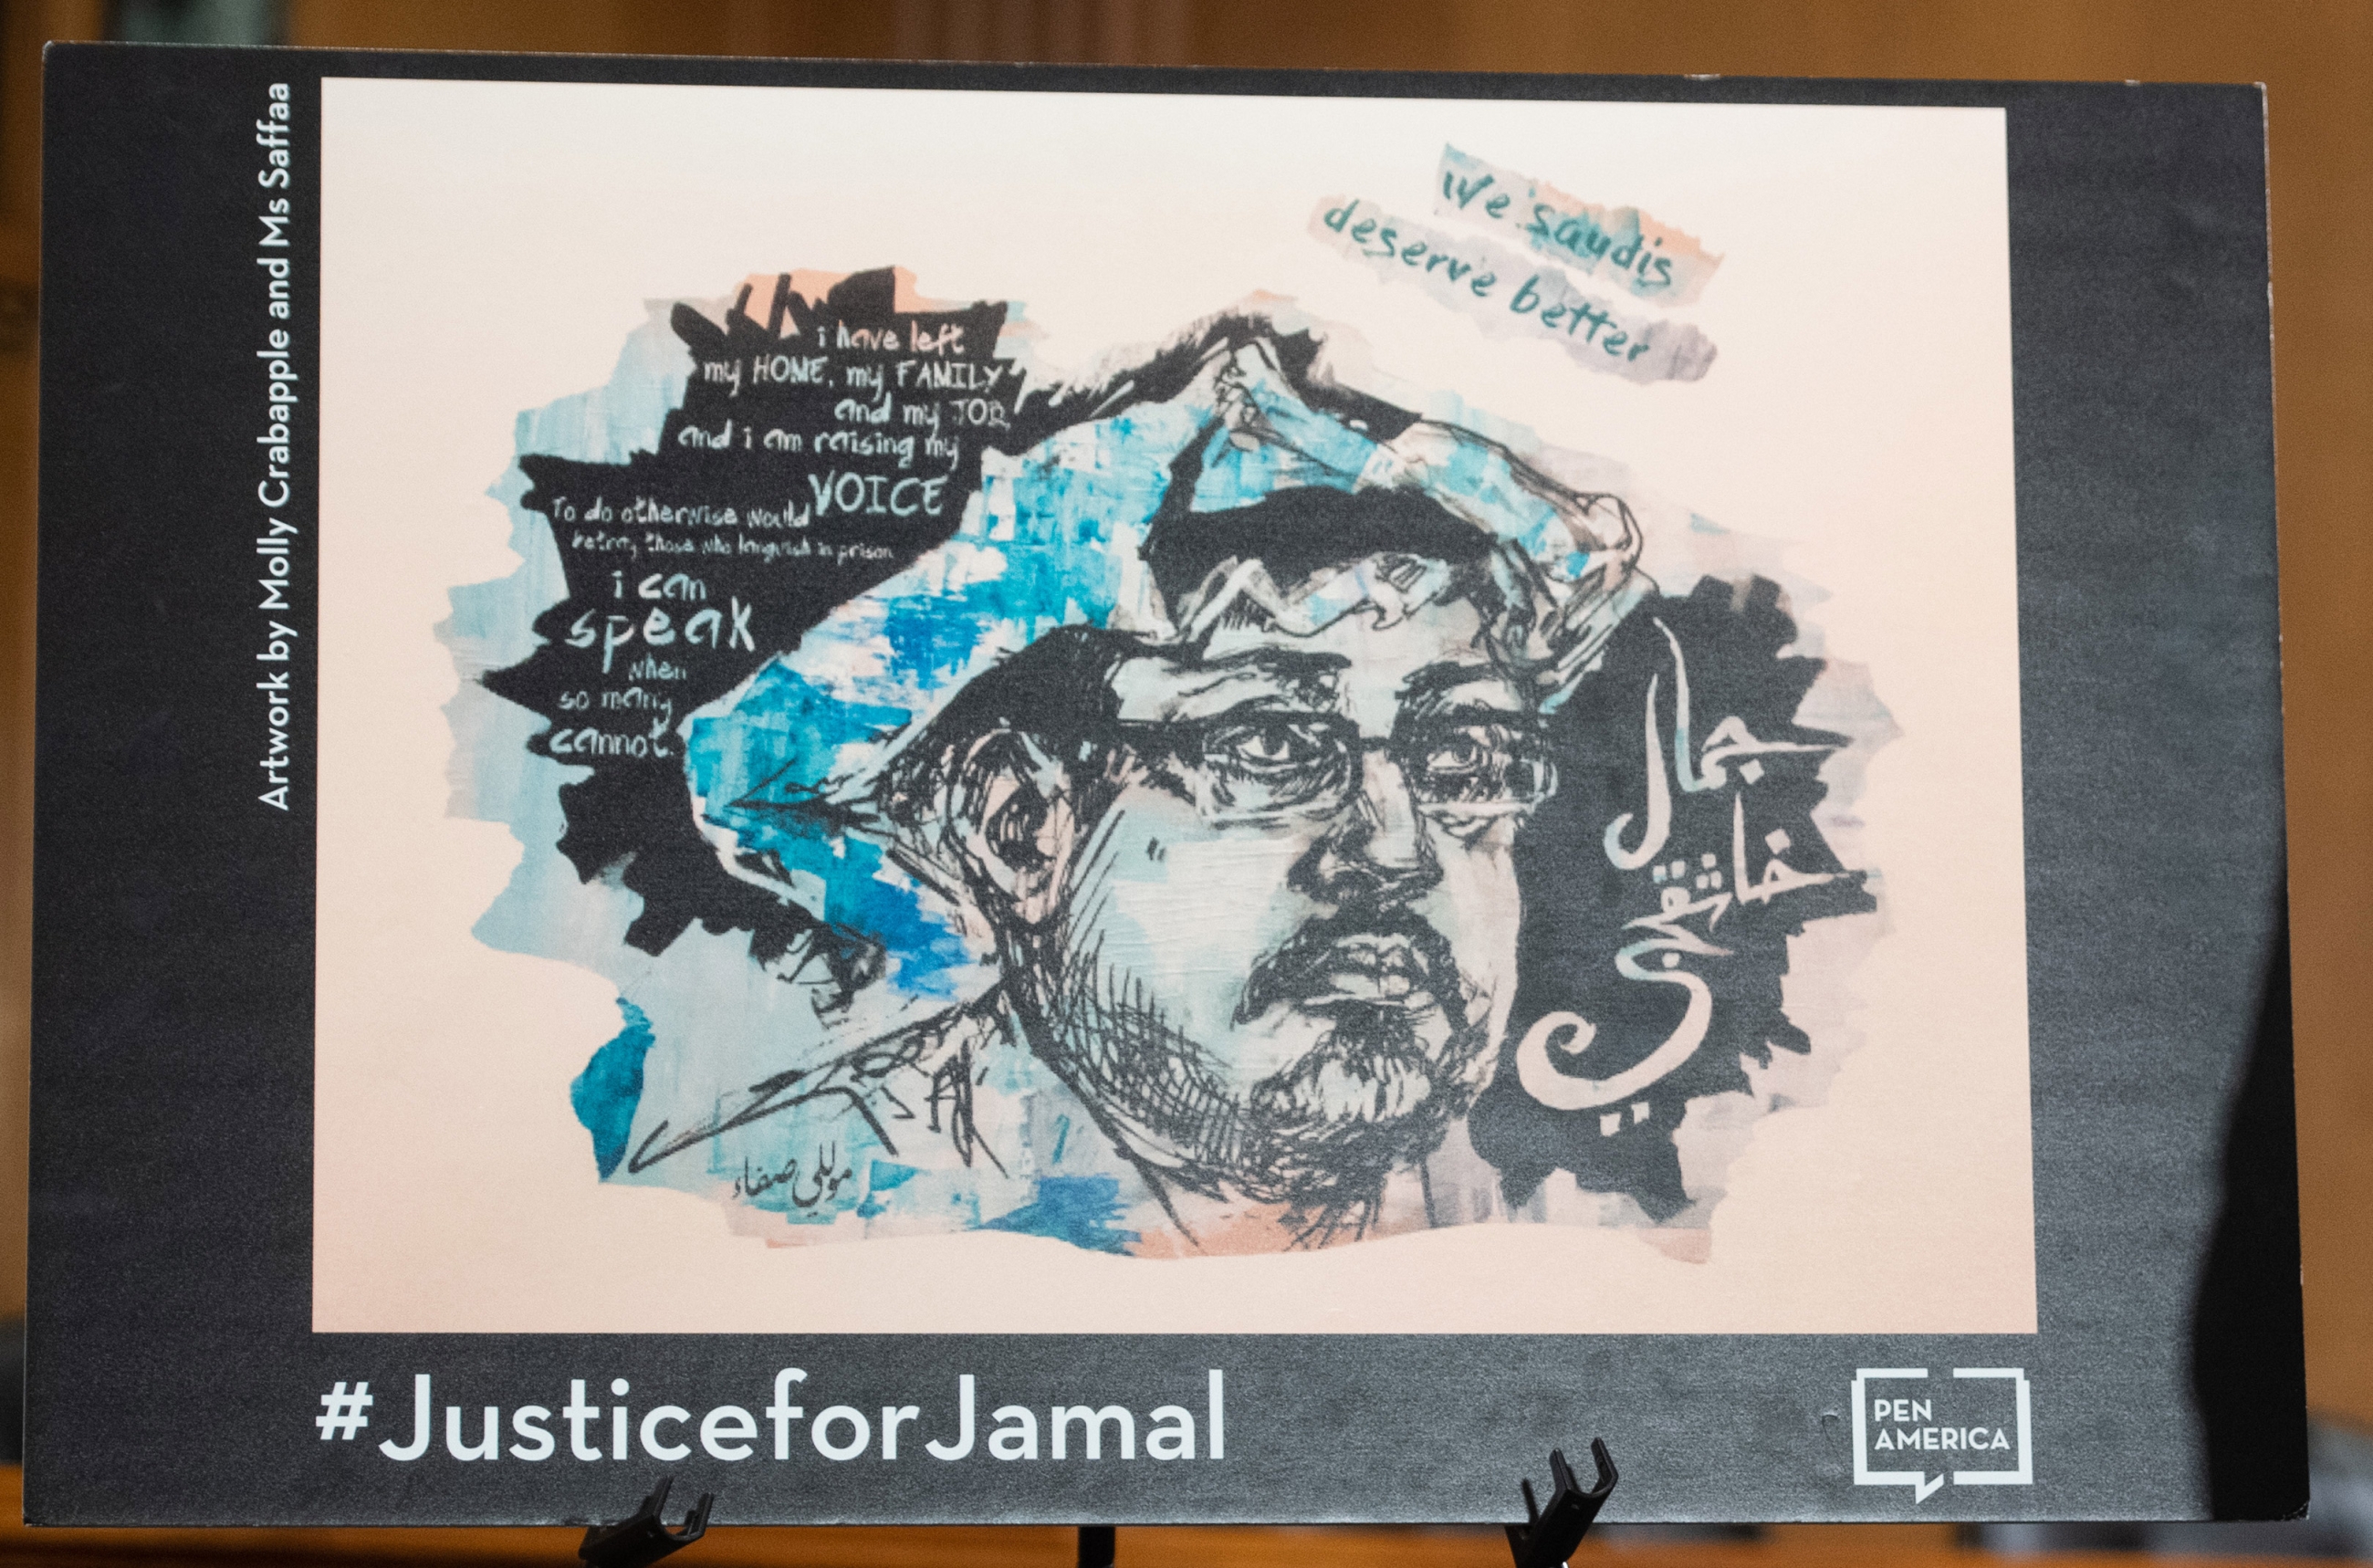 Saudi journalist Jamal Khashoggi was murdered at the Saudi consulate in Istanbul on 2 October 2018.